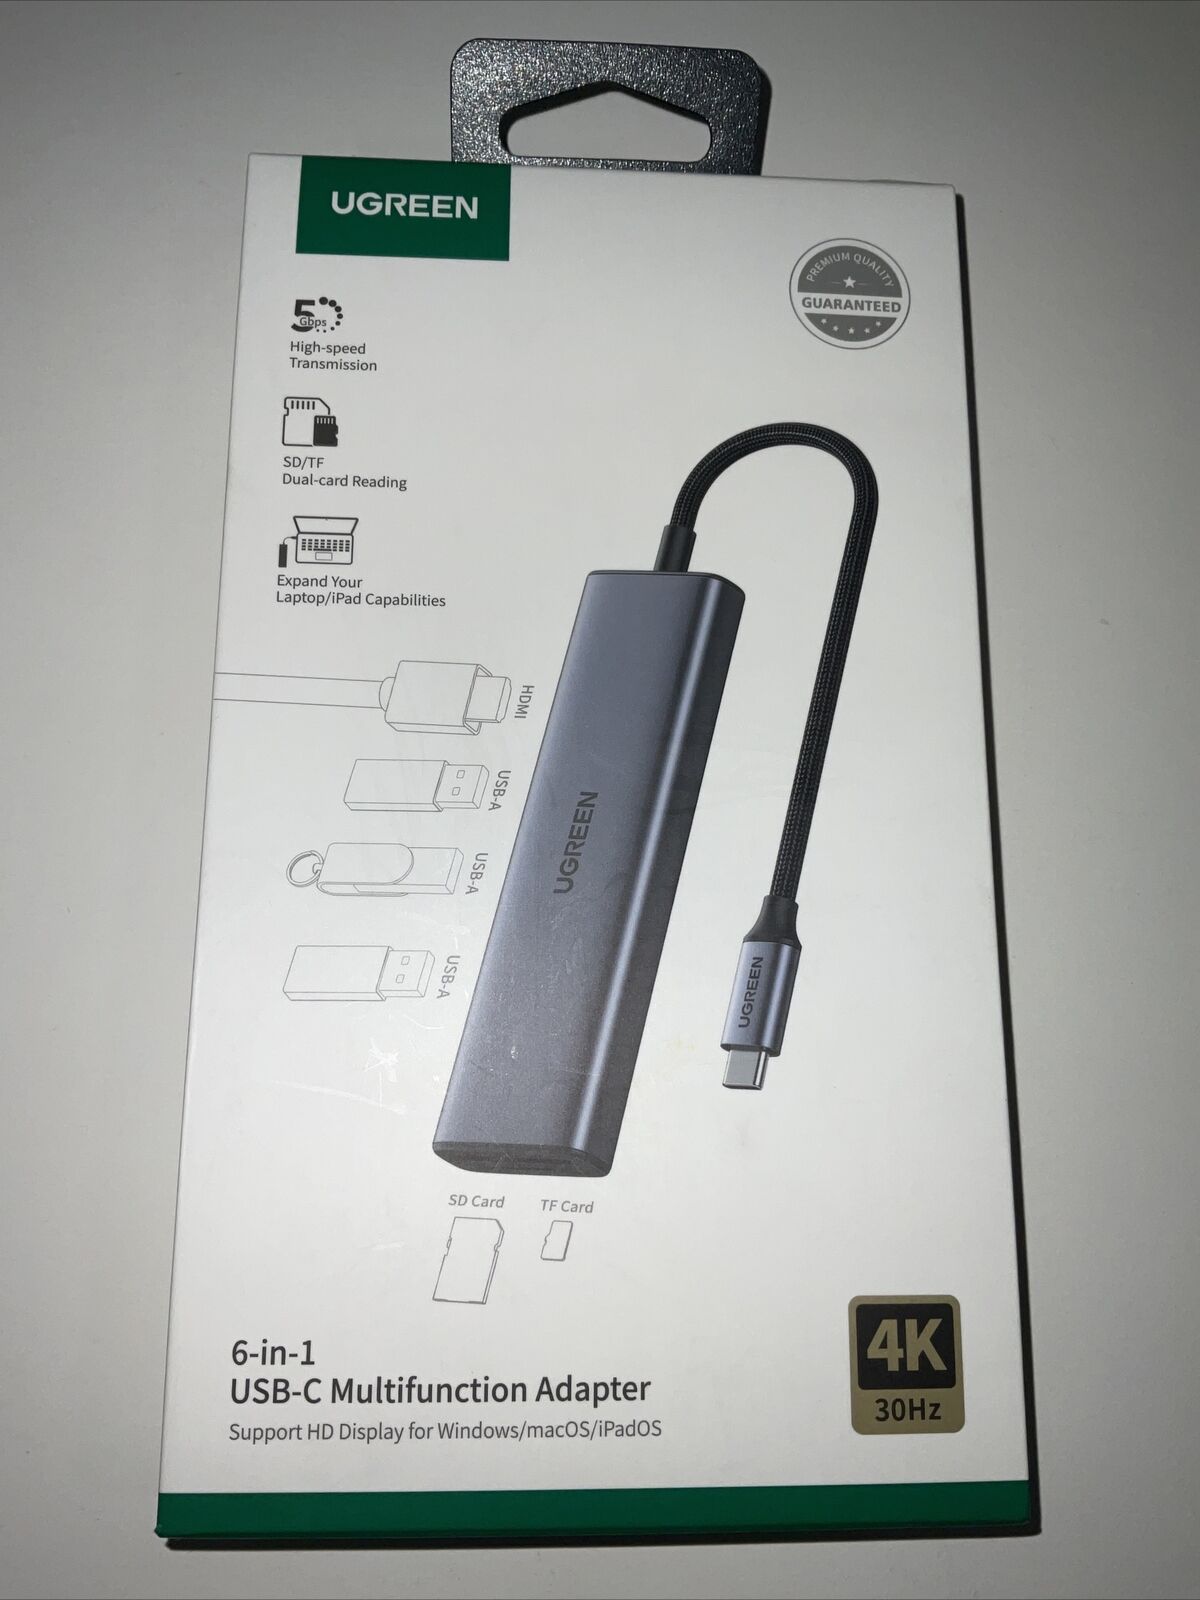 Ugreen 6-in-1 USB-C Multifunction Adapter Supports HD Windows/macOS/iPadOS